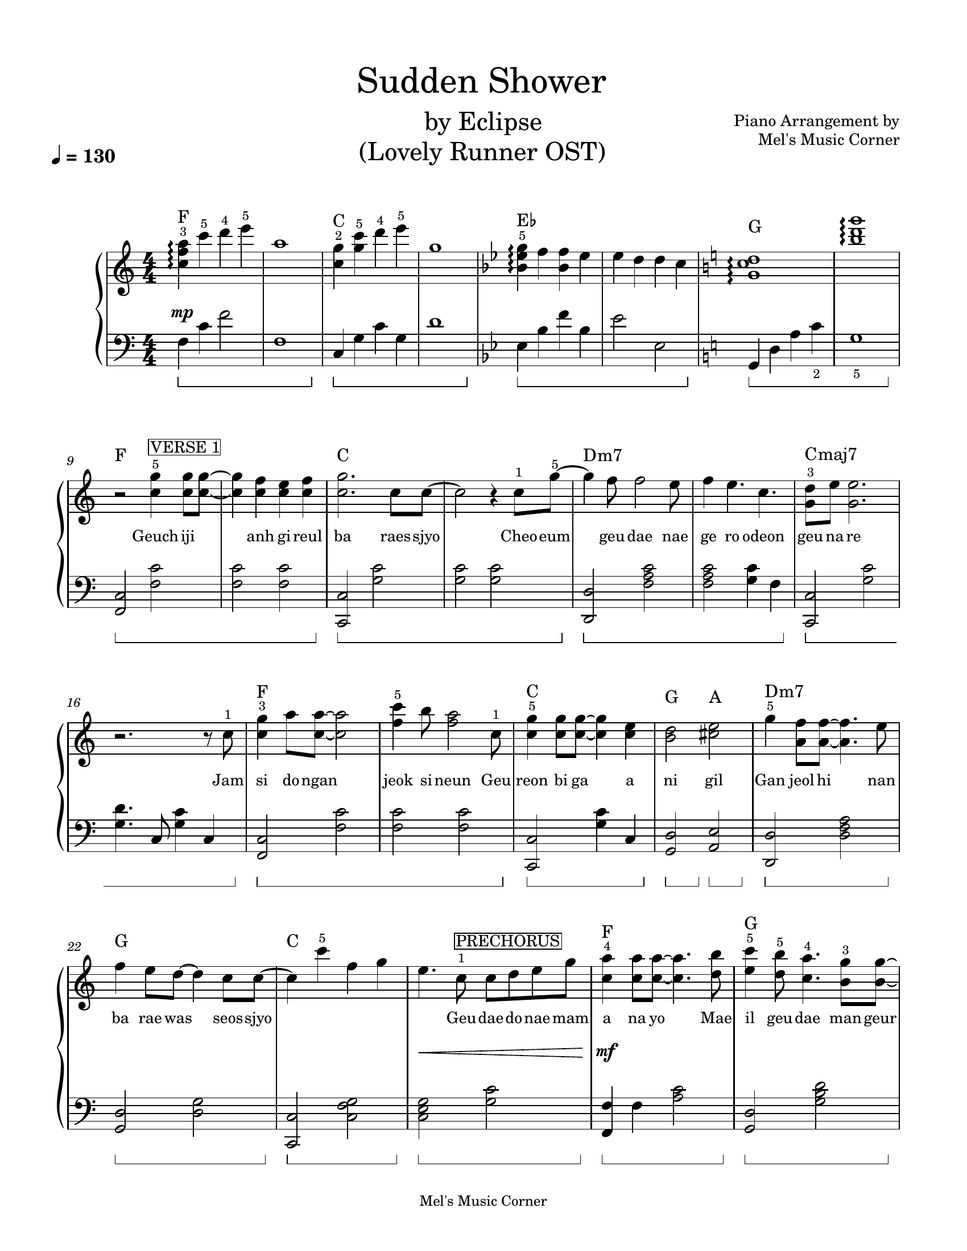 Eclipse - Sudden Shower (Lovely Runner OST) piano sheet music by Mel's Music Corner